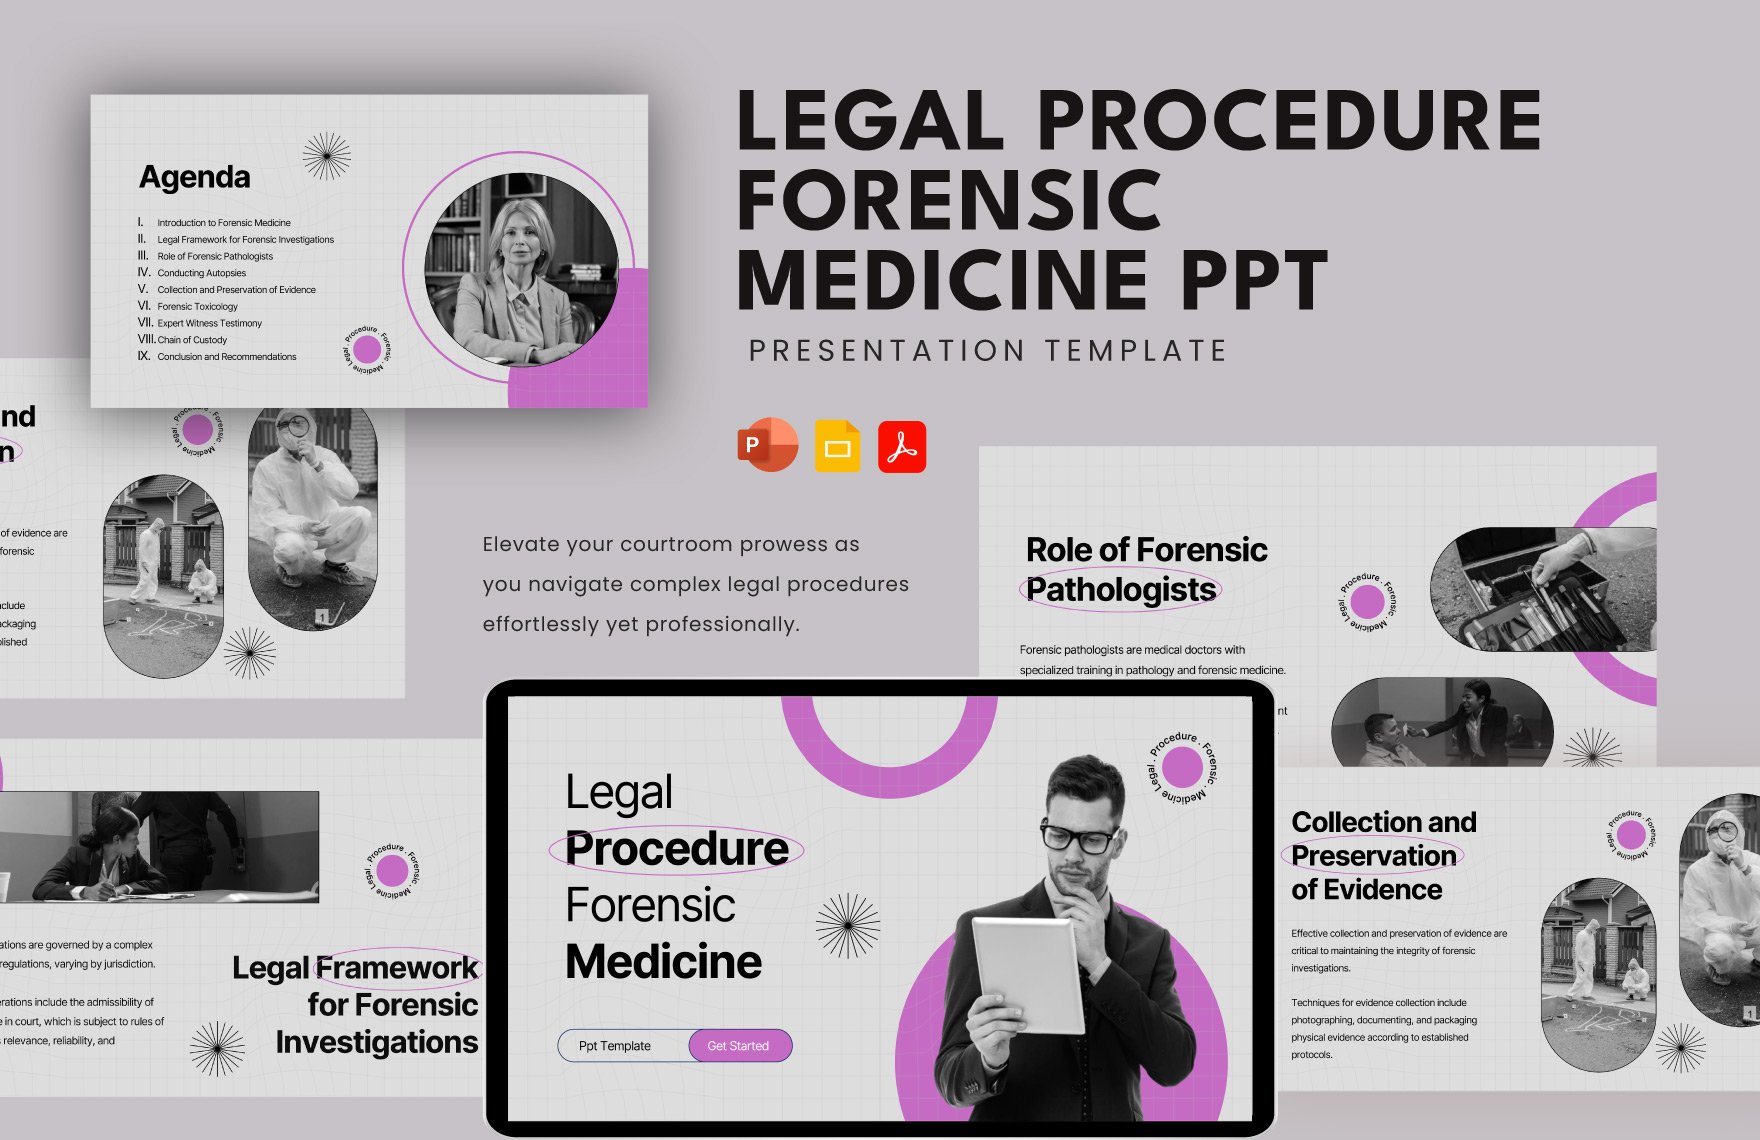 Legal Procedure Forensic Medicine PPT Template